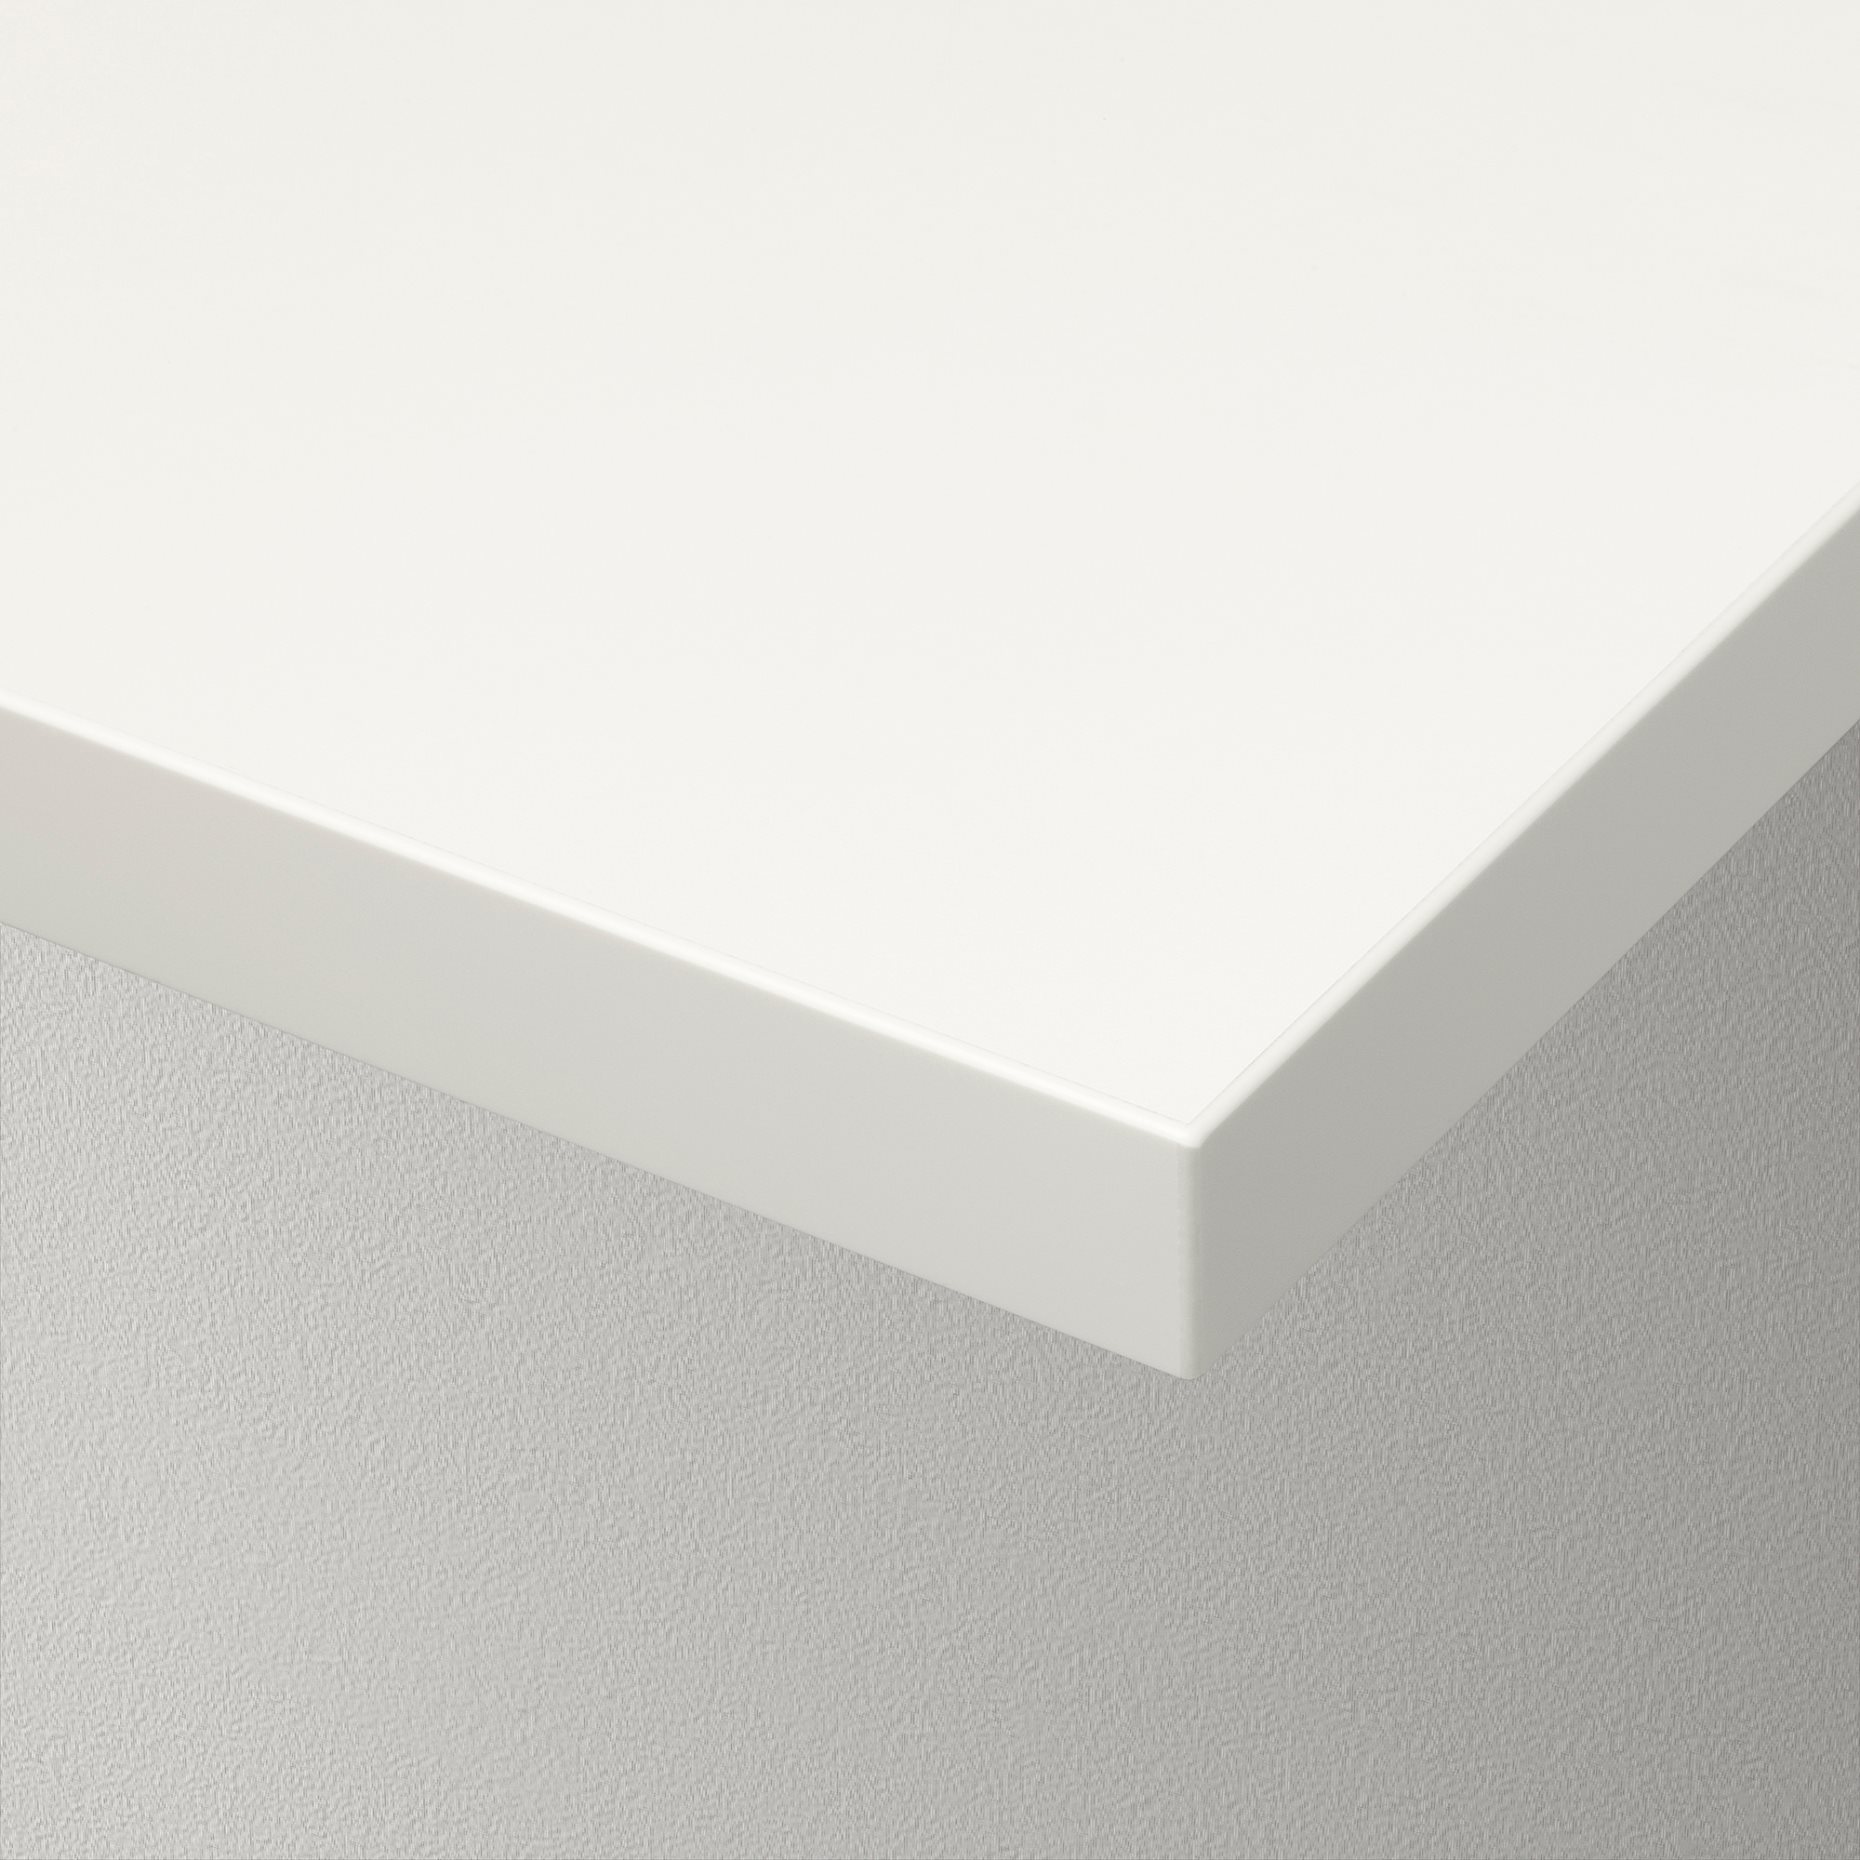 BERGSHULT/GRANHULT, wall shelf combination, 80x20 cm, 792.910.82